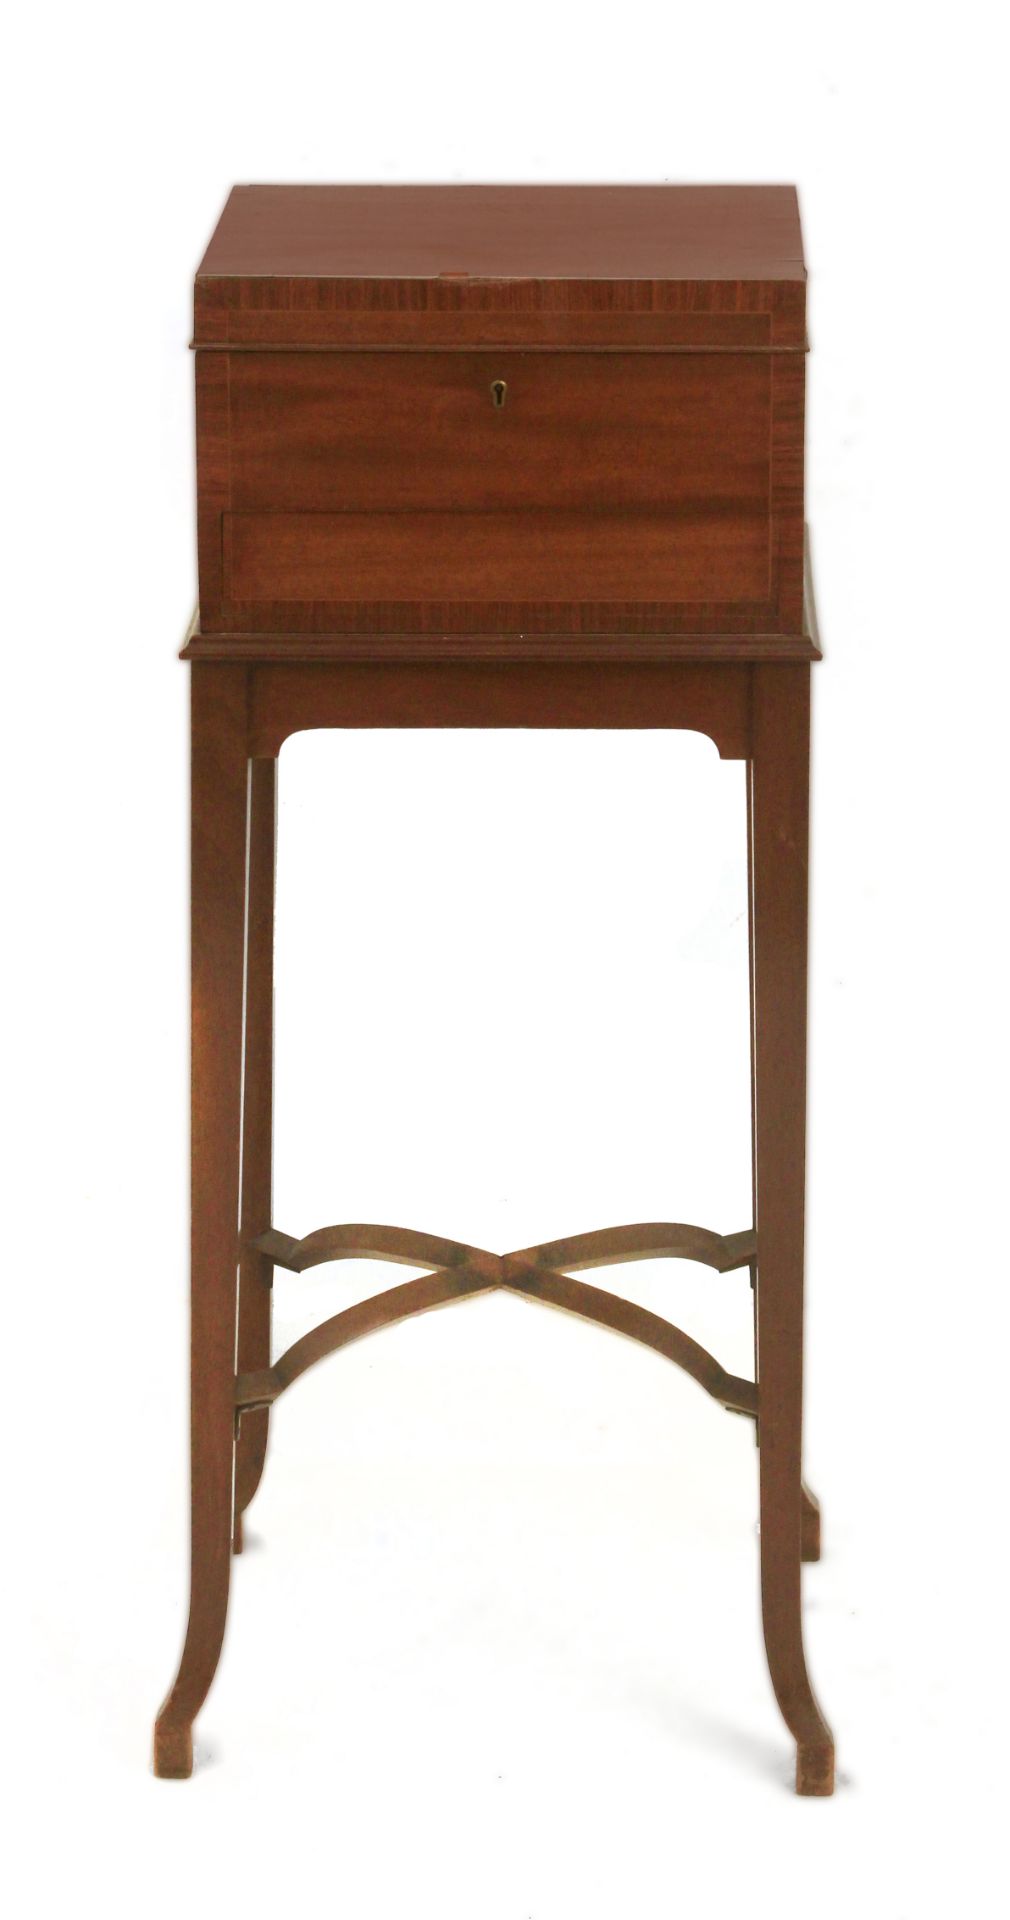 Victorian mahogany sewing box, England, 19th century - Image 4 of 4